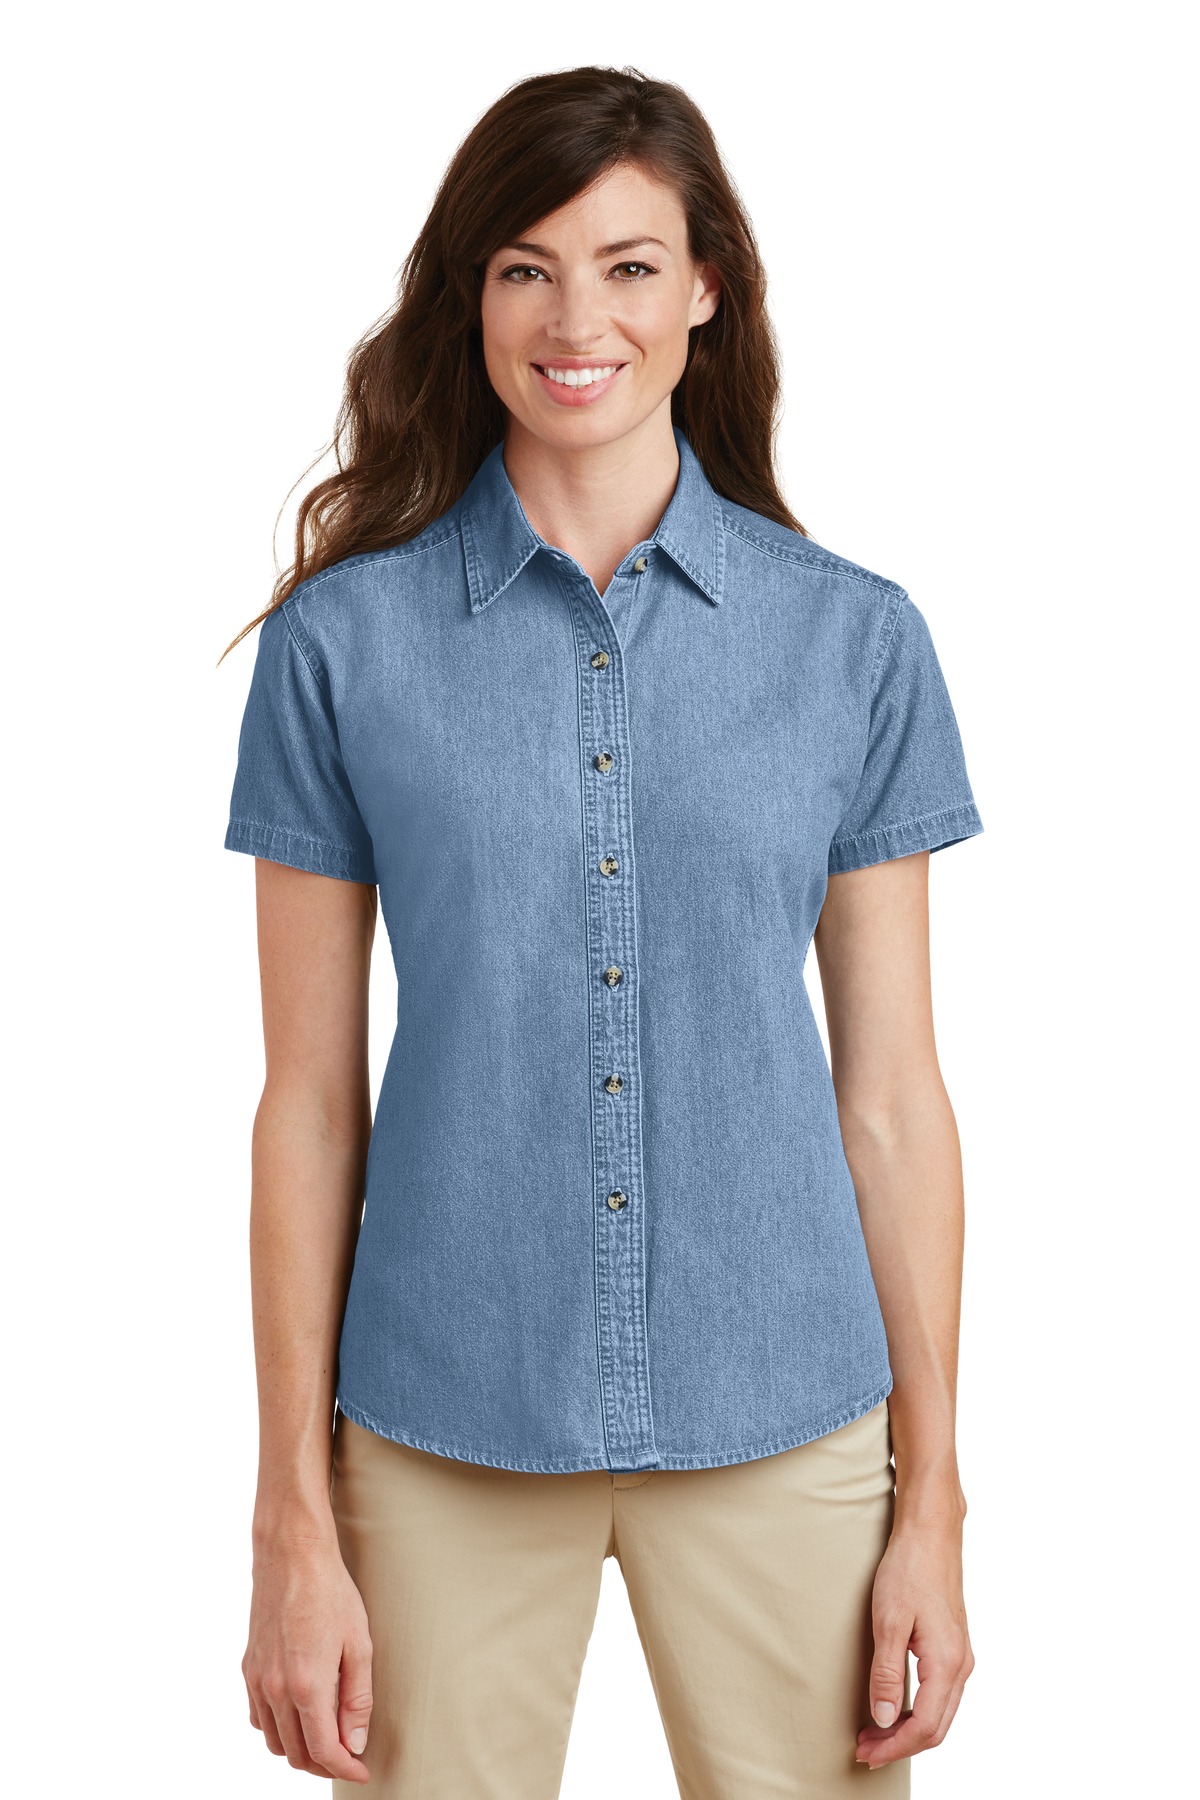 Port & Company Women's Short Sleeve Value Denim Shirt LSP11 - image 1 of 1